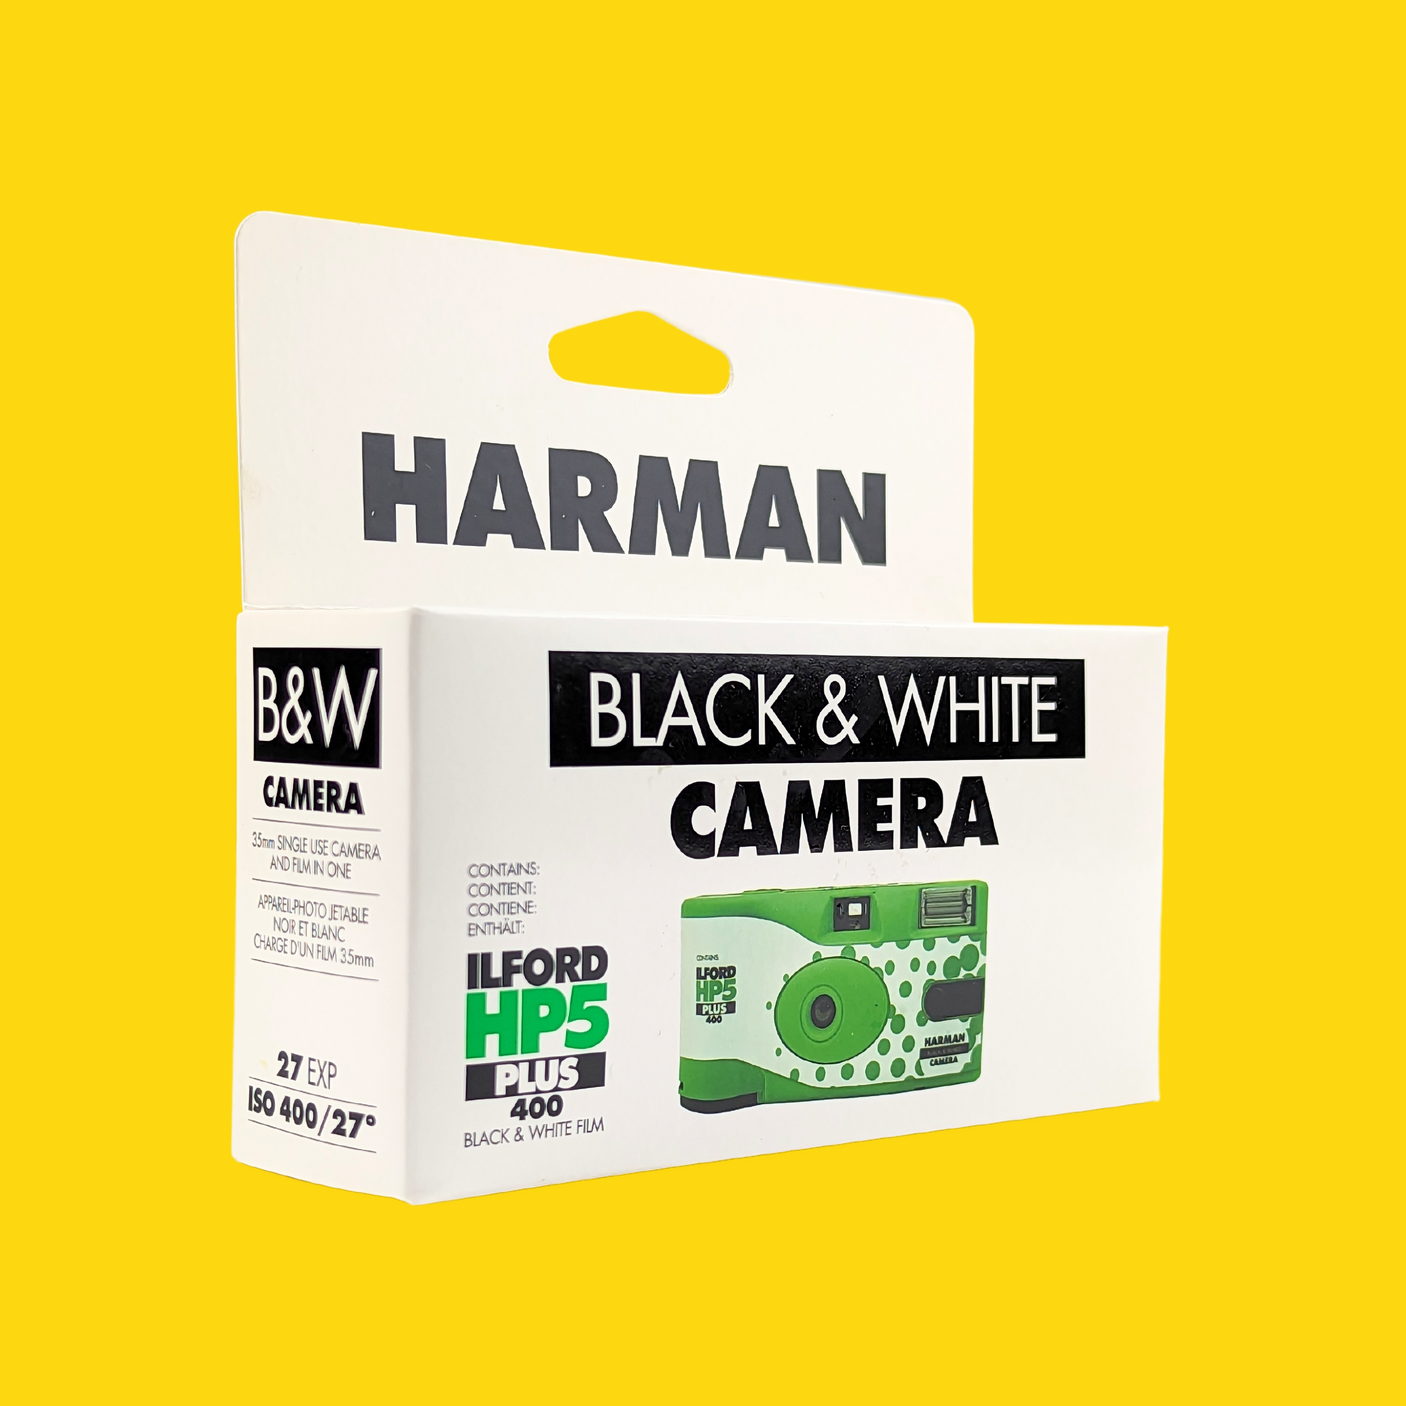 Harman Black and White Disposable 35mm Camera - Ilford HP5 Plus 400